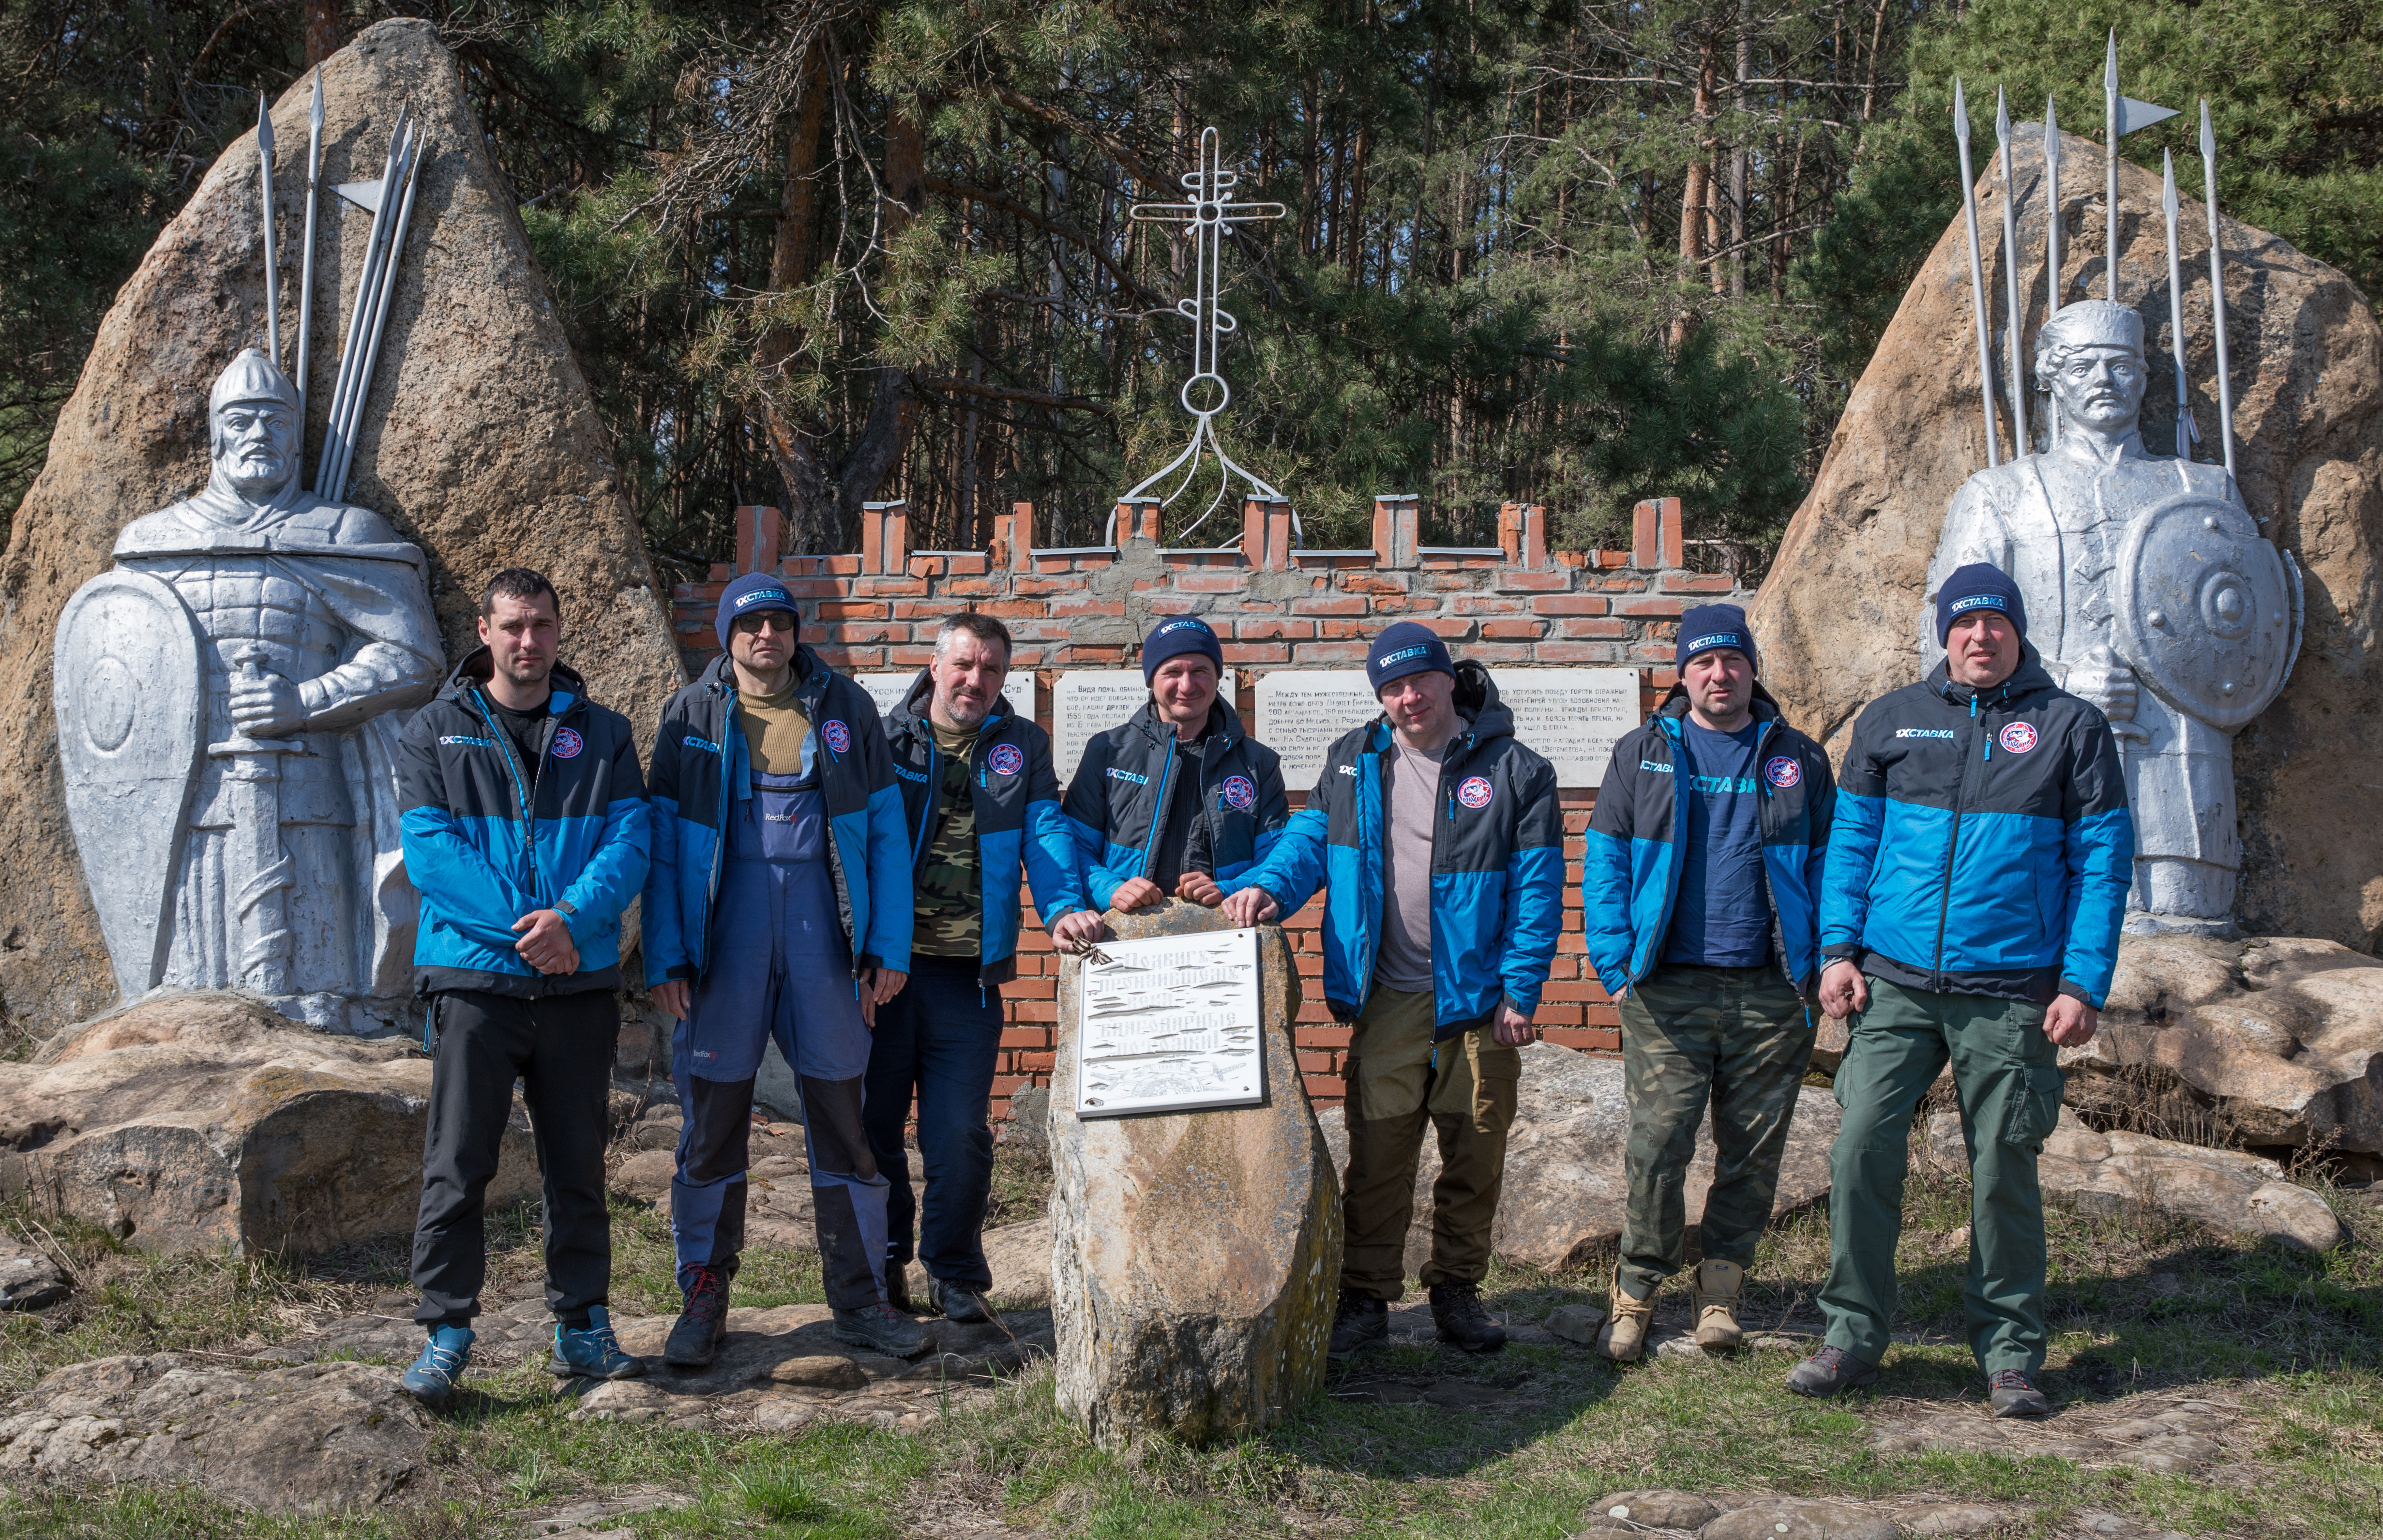 DIVO dive club team members at the Battle of Sudbischen memorial in Oryol, Russia. Photo by Stanislav Trofimov